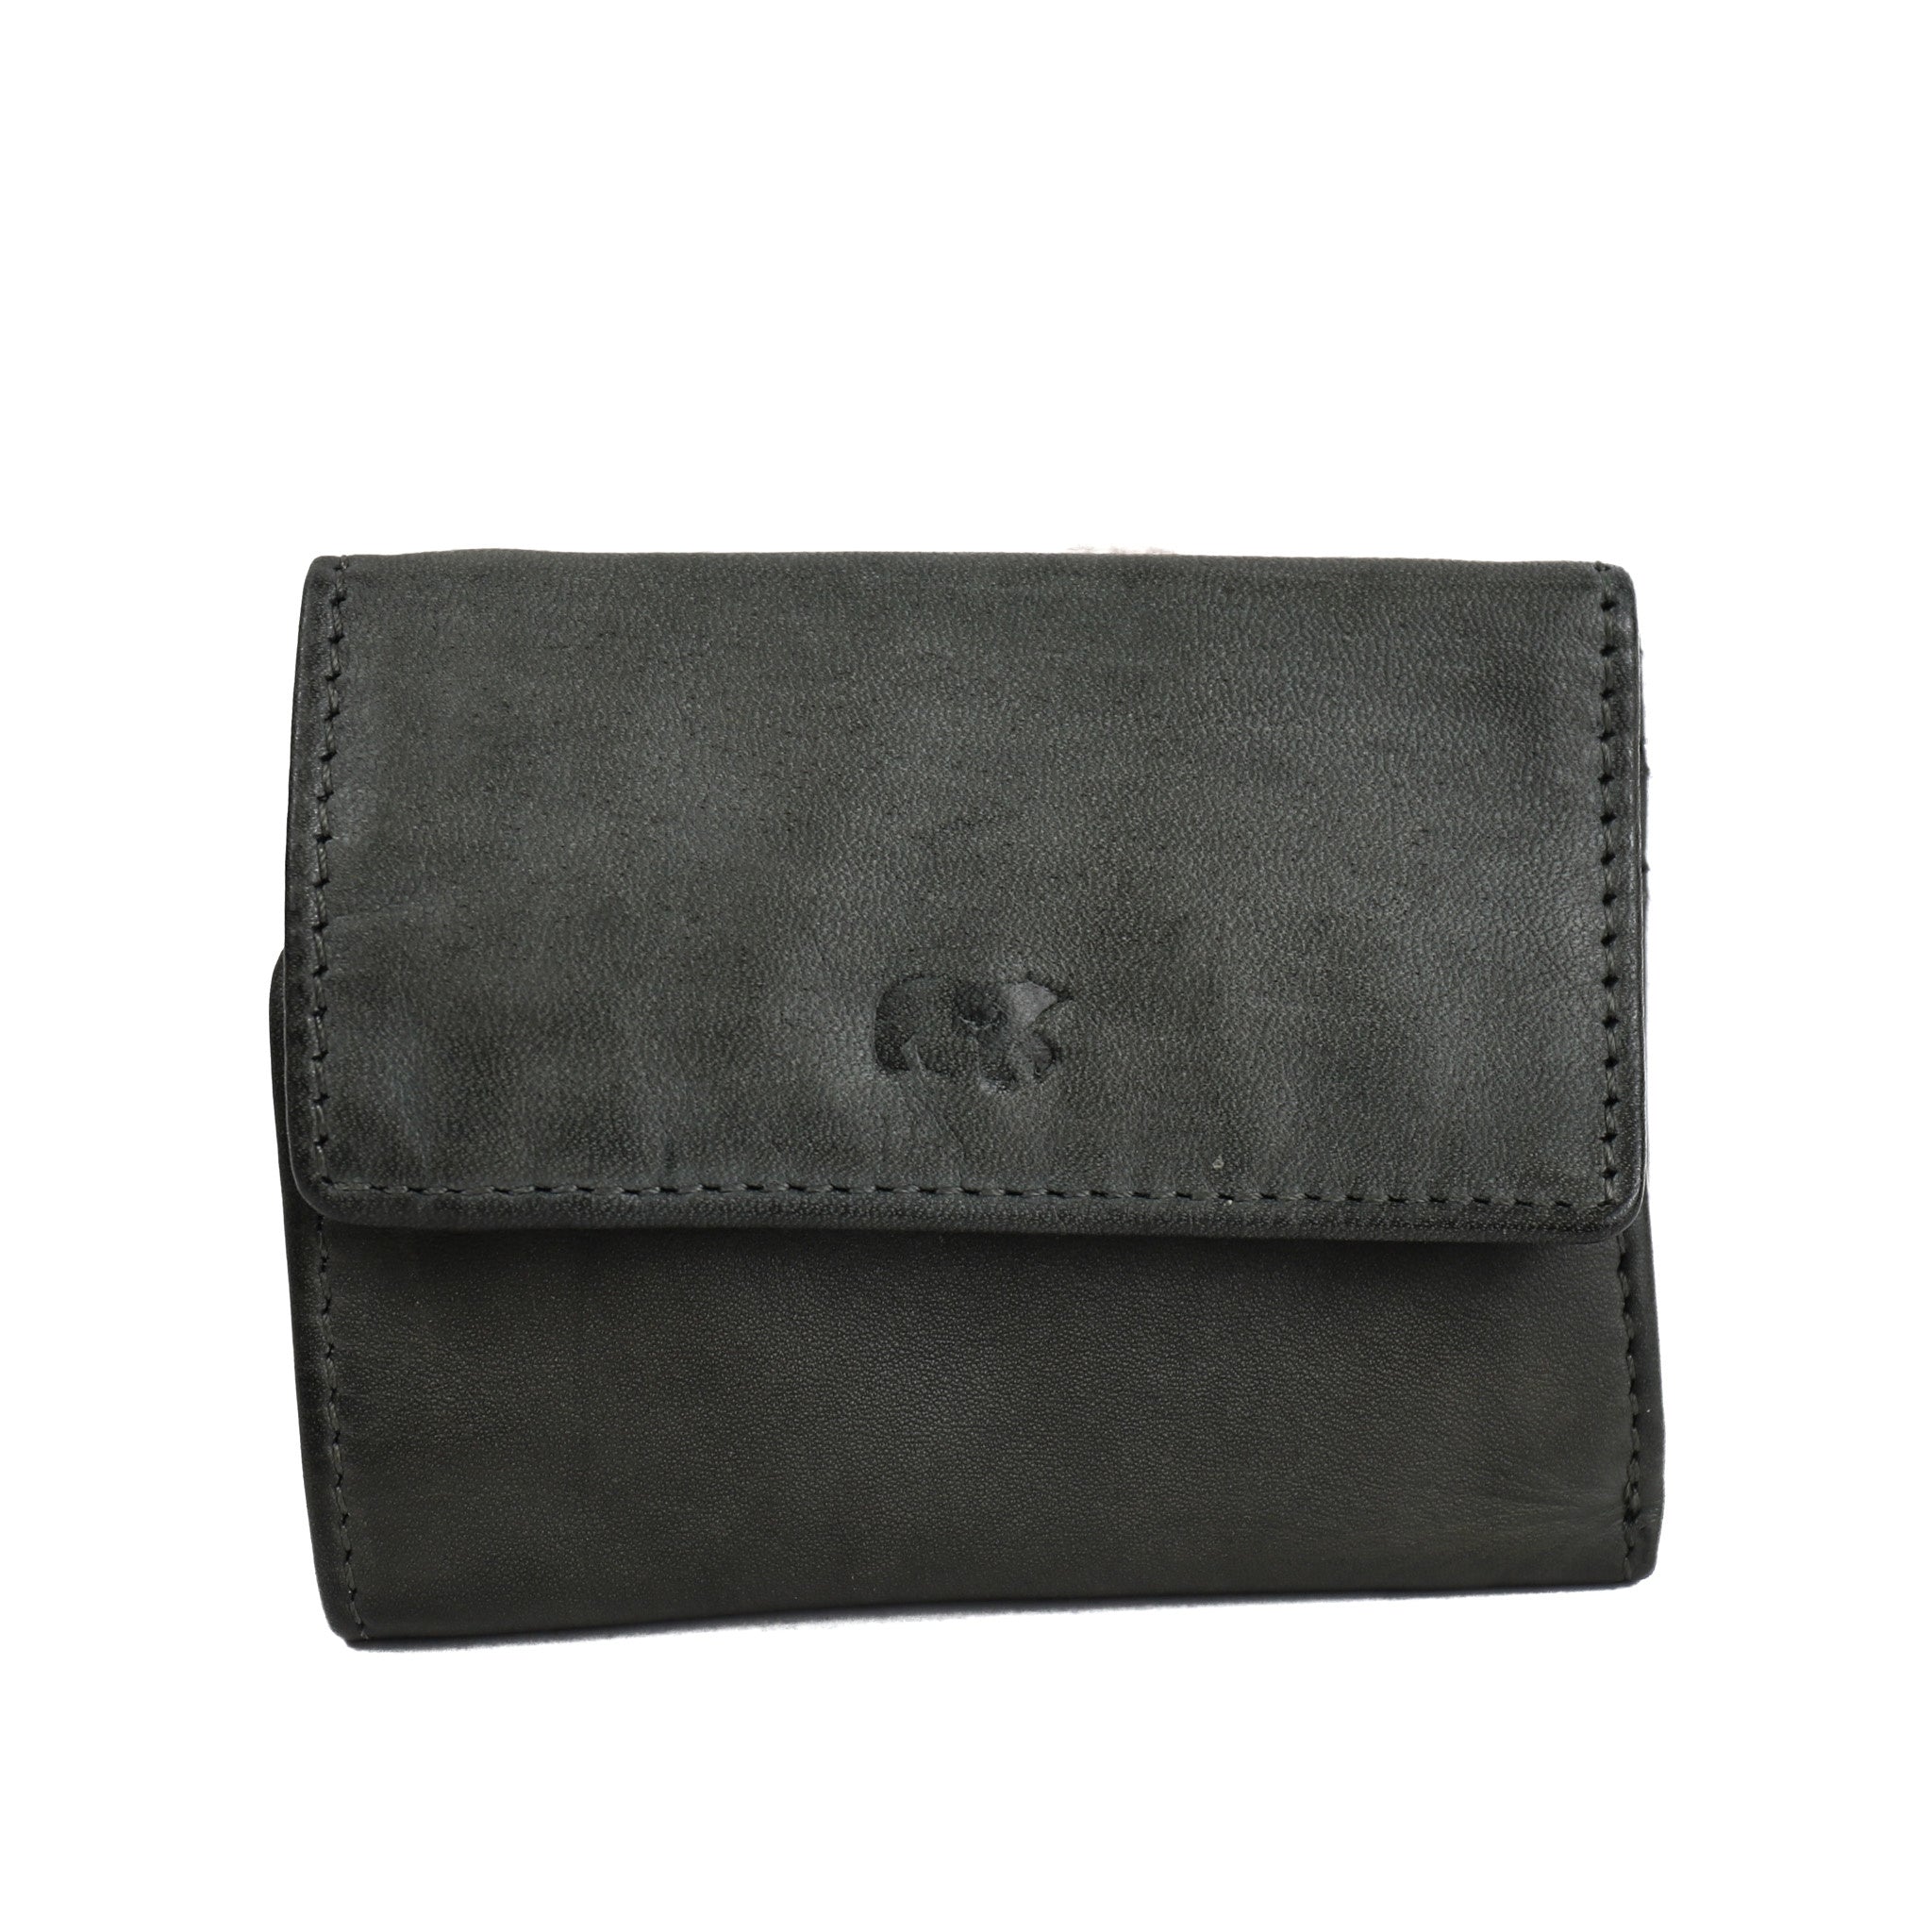 Wallet 'Jolie' ultimate gray - CL 14618